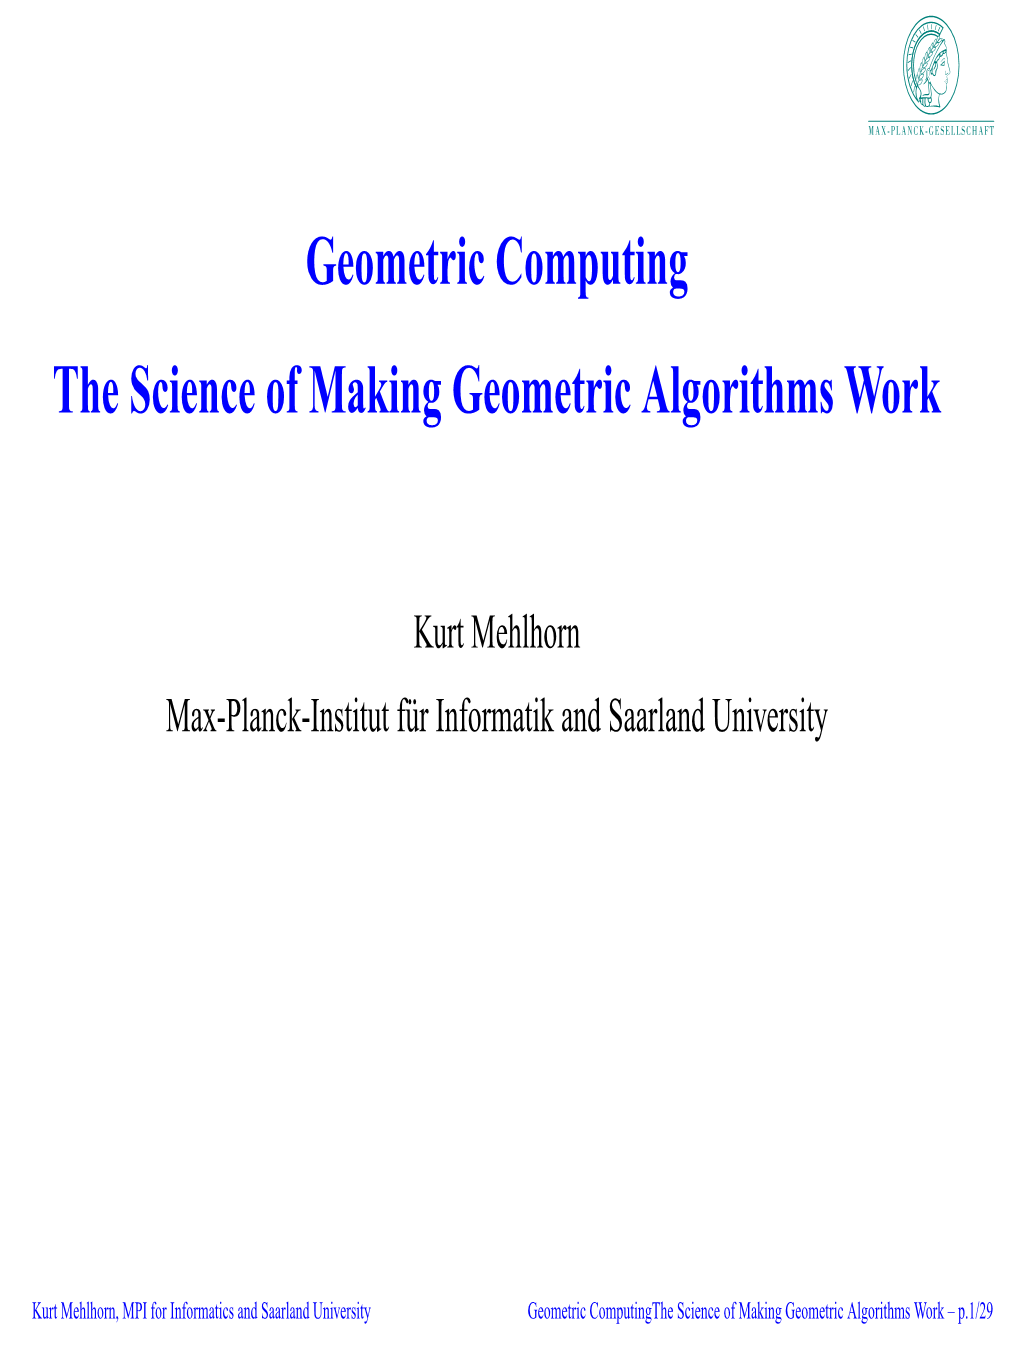 Geometric Computing the Science of Making Geometric Algorithms Work